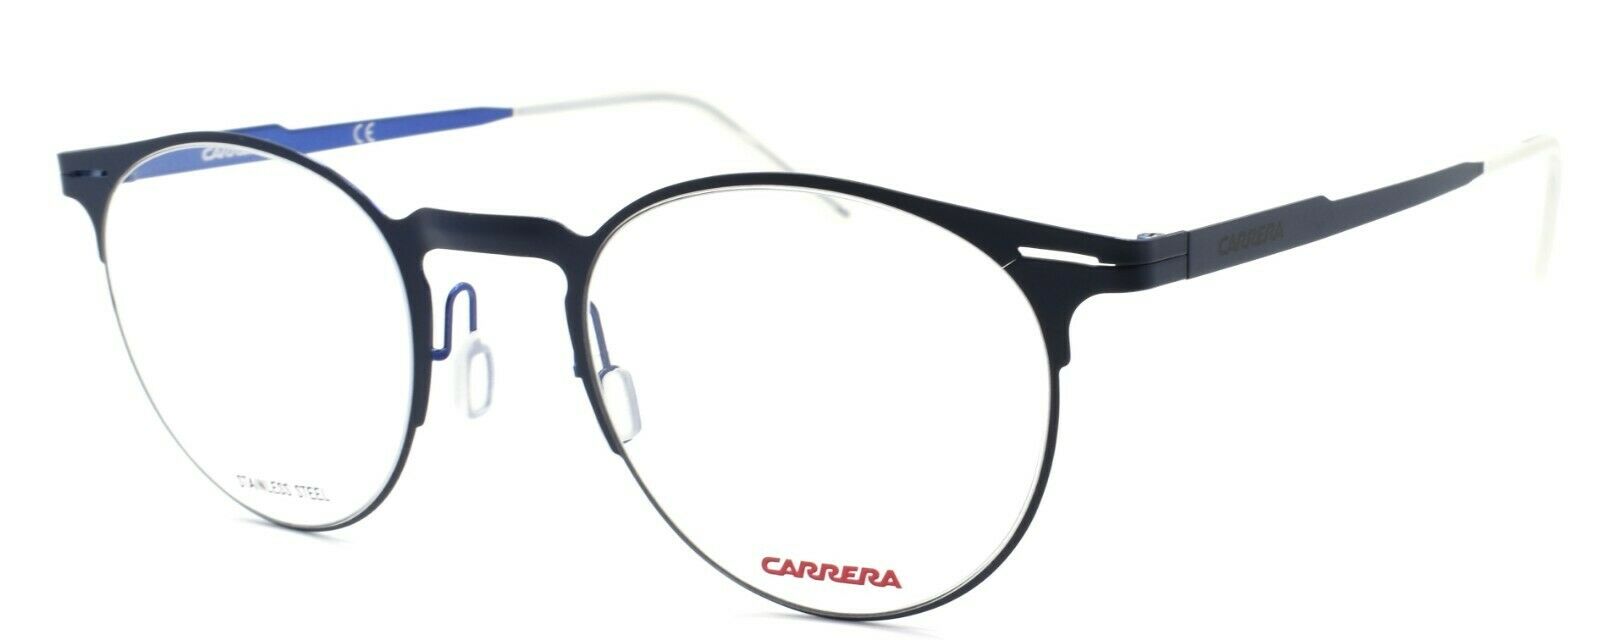 1-Carrera CA6659 VBM Men's Eyeglasses Frames 48-22-145 Matte Blue + CASE-762753959690-IKSpecs